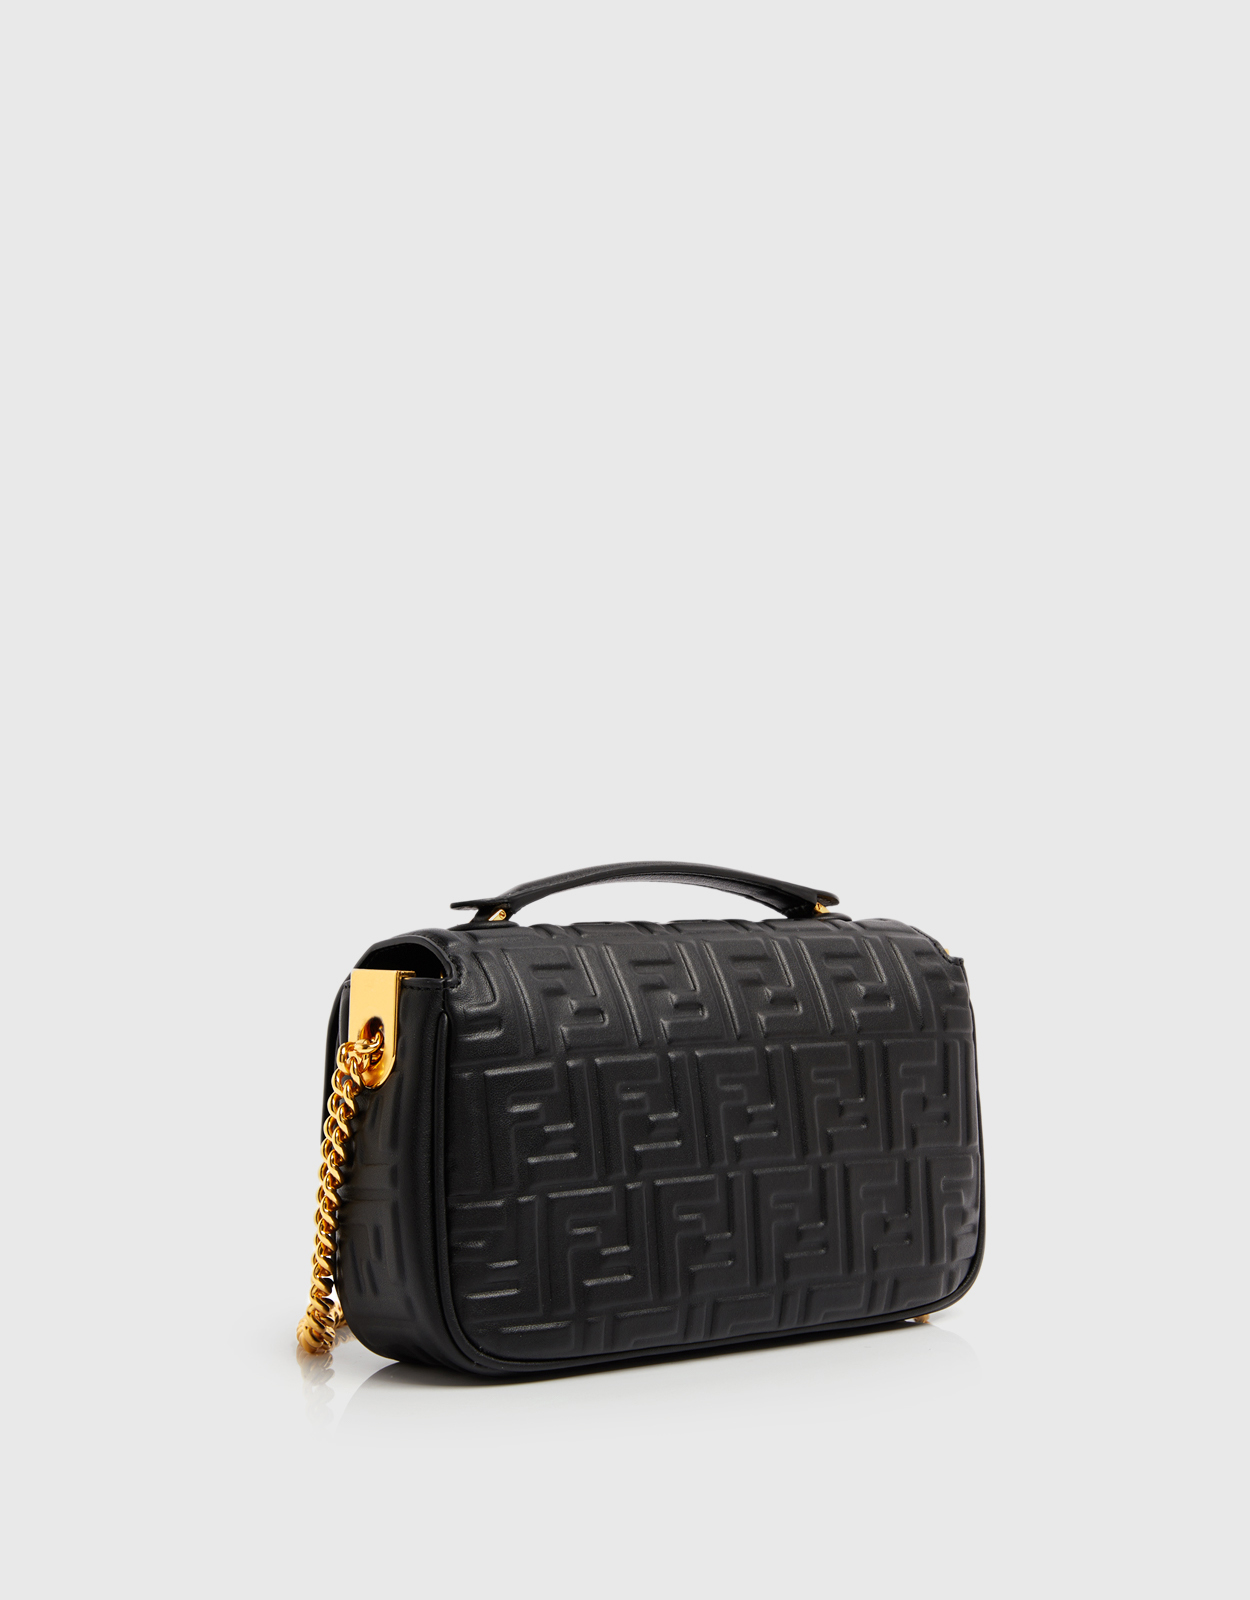 Baguette - Black leather bag | Fendi